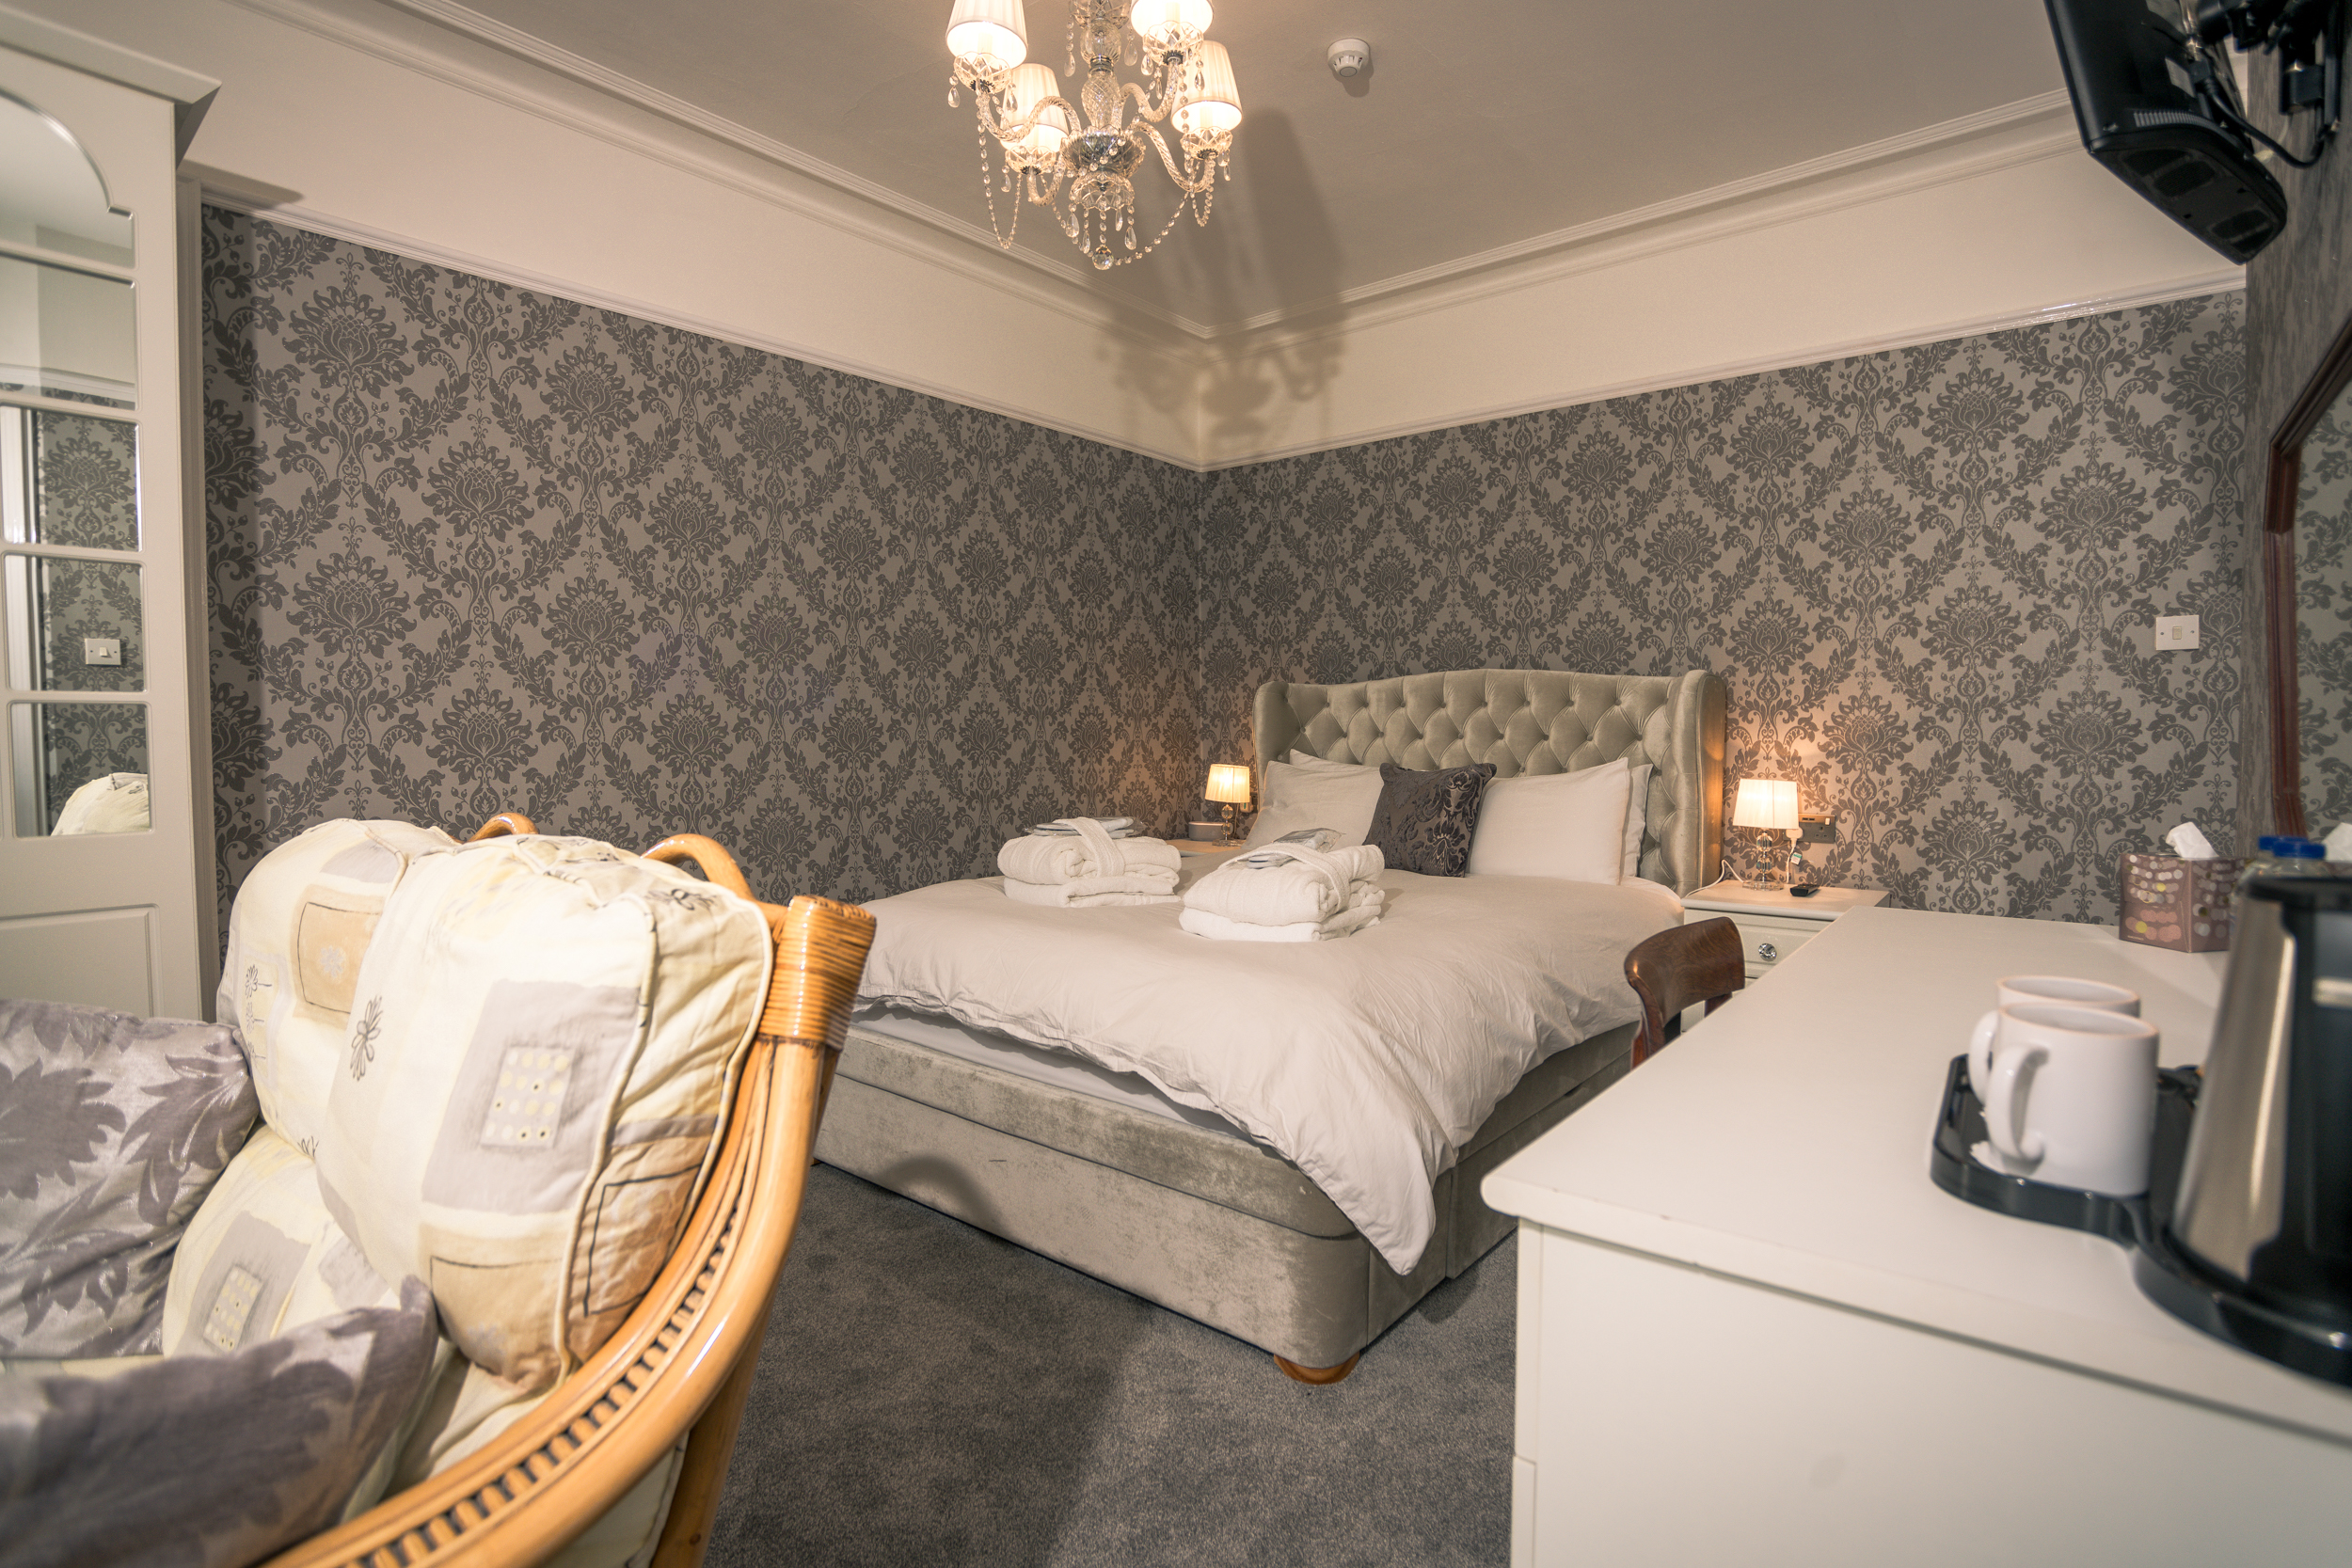 Room 3 - King Bed with Loch Views, Ensuite Bathroom